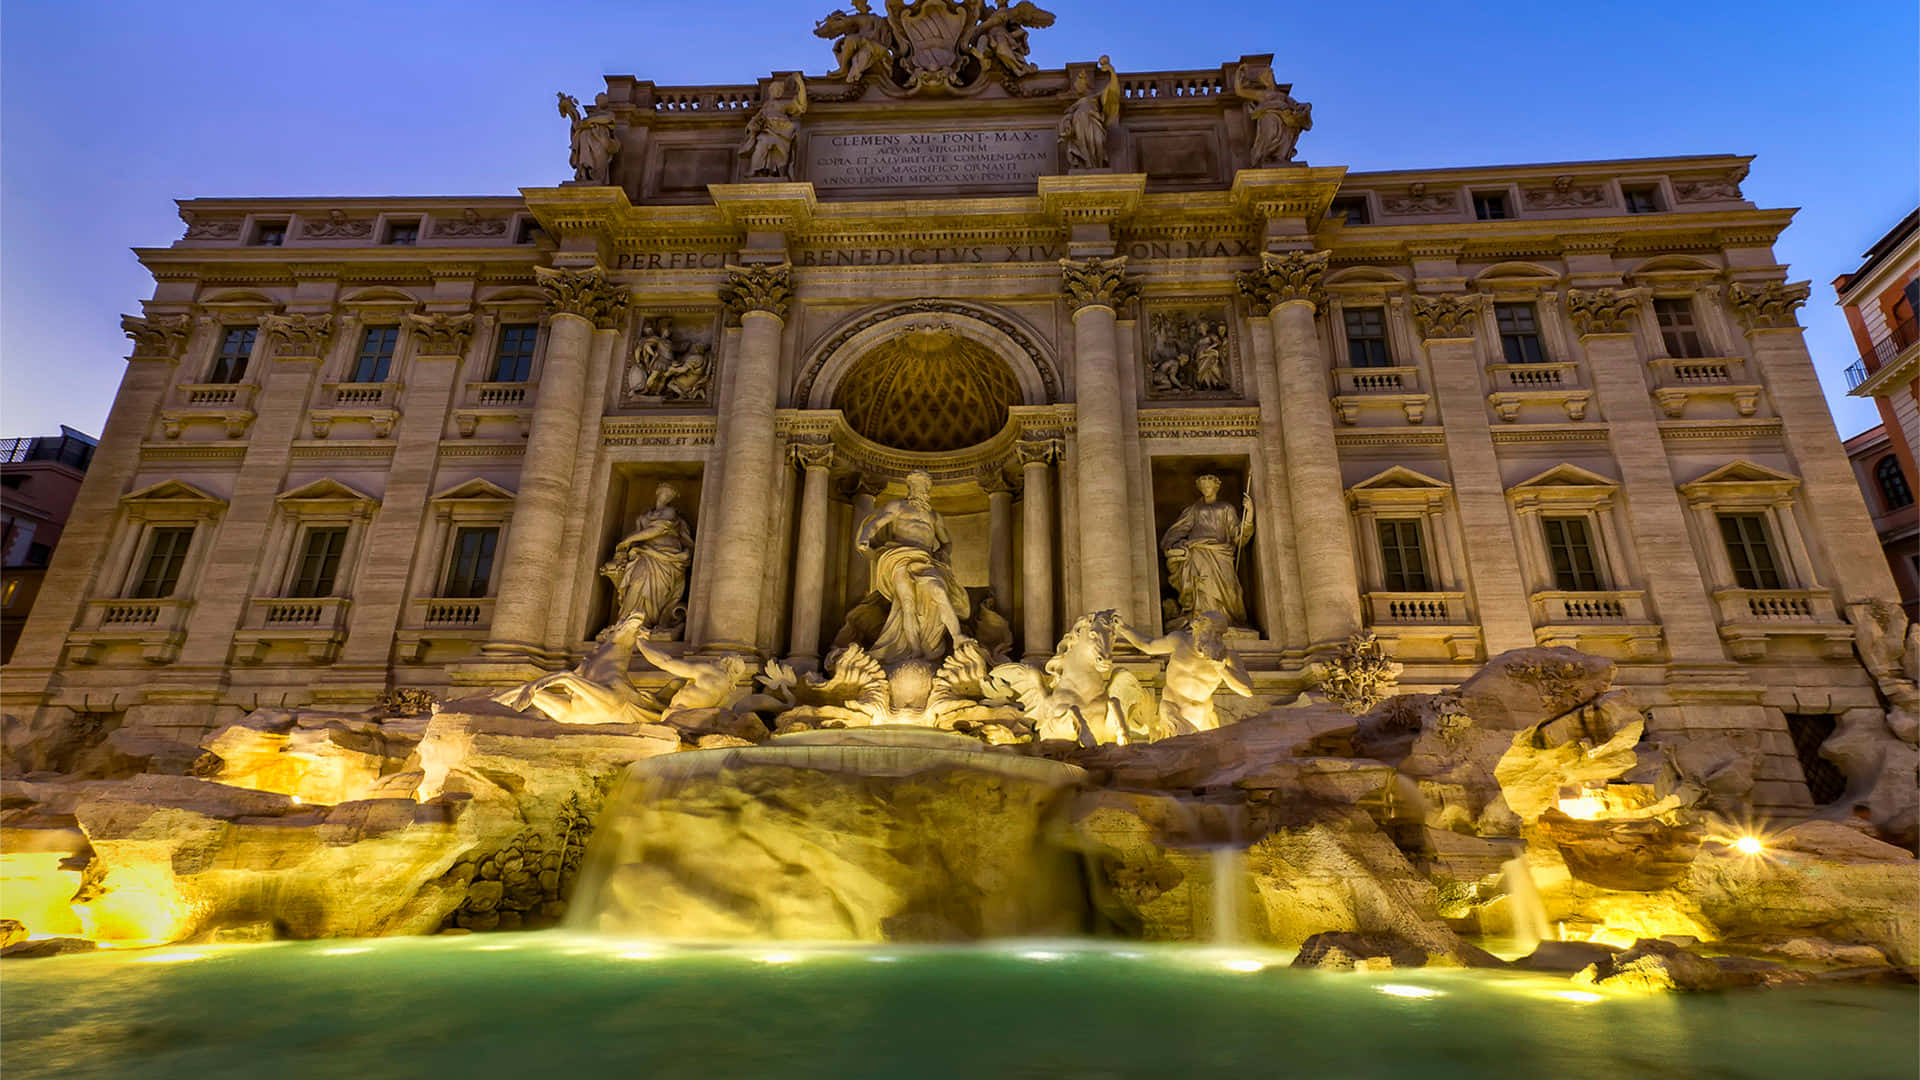 The Trevi Fountain Glistening In Golden Light Picture